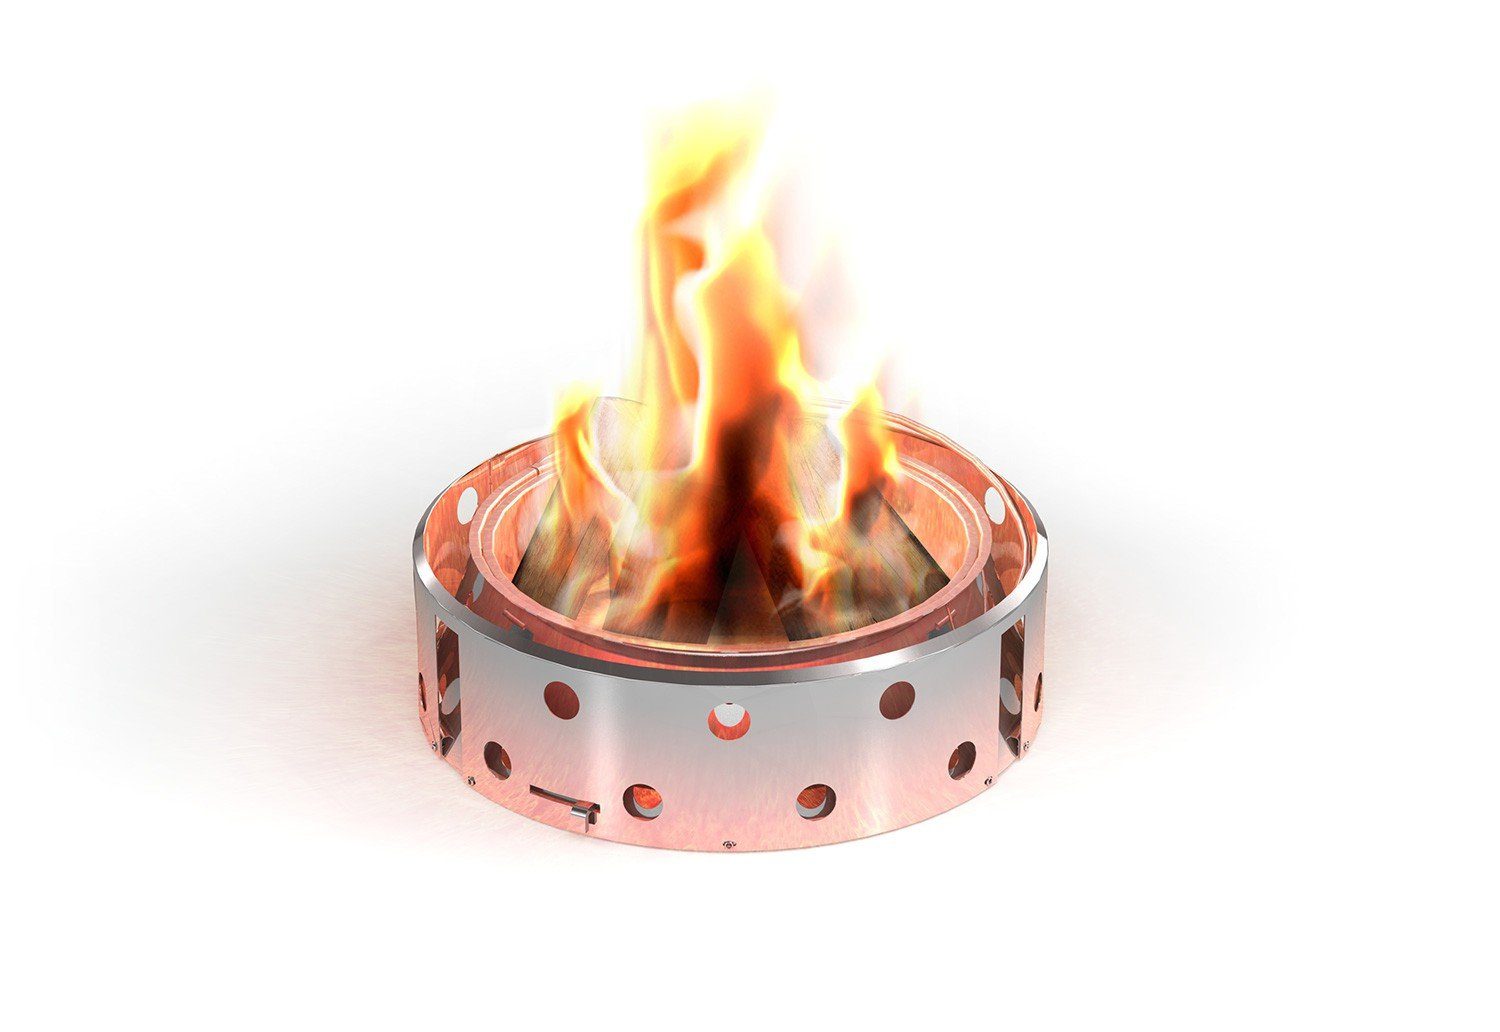 Feuerschale oder Atago als nutzbar Ofen, Petromax - Feuerschale Grill, Herd